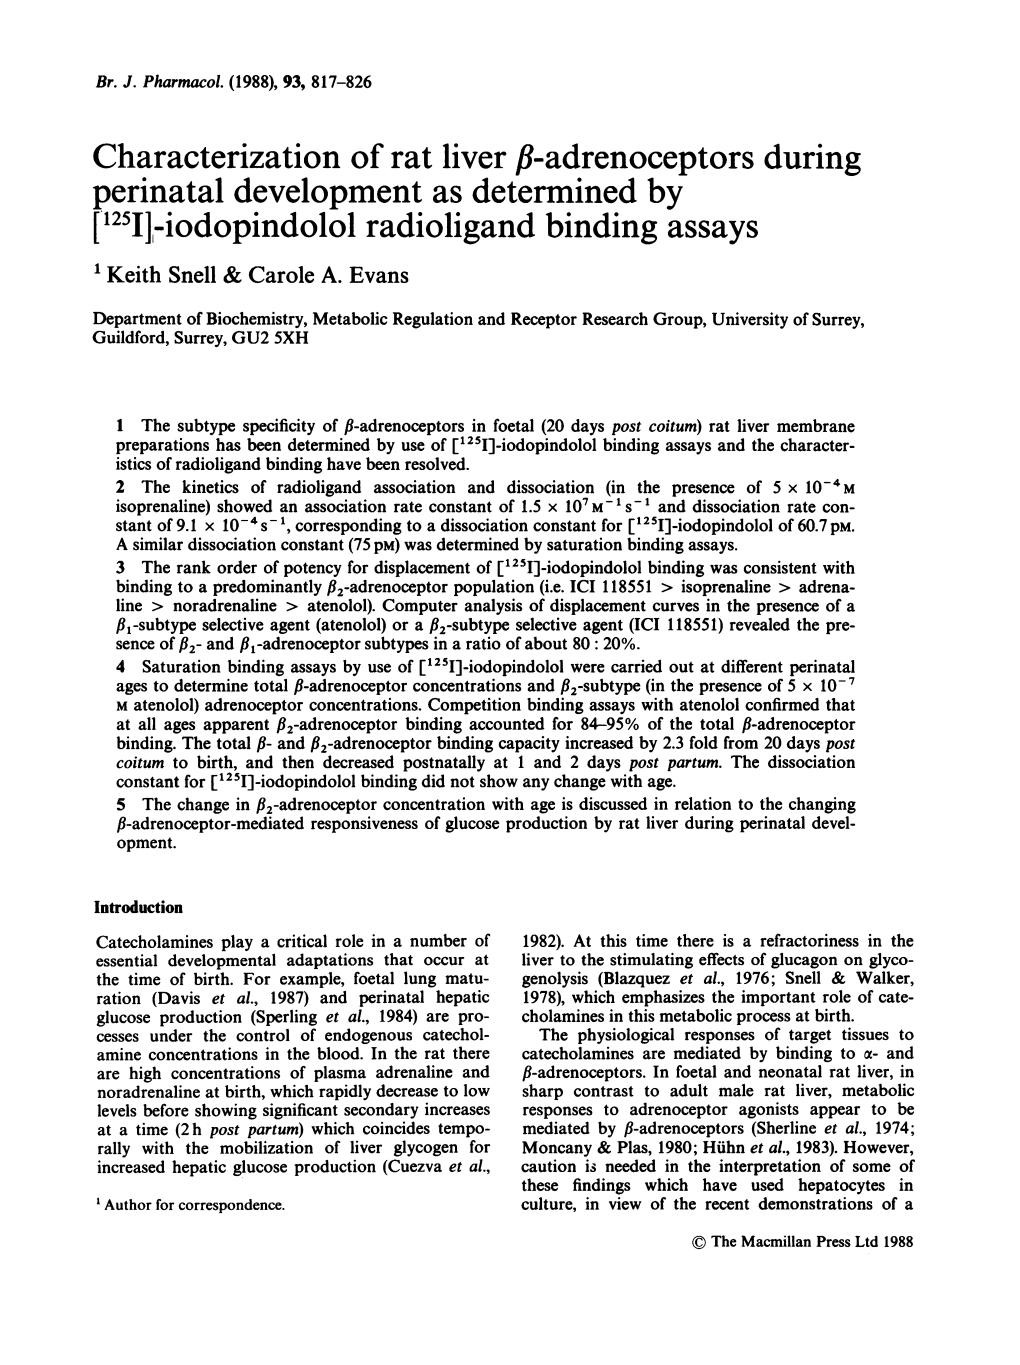 Iodopindolol Radioligand Binding Assays